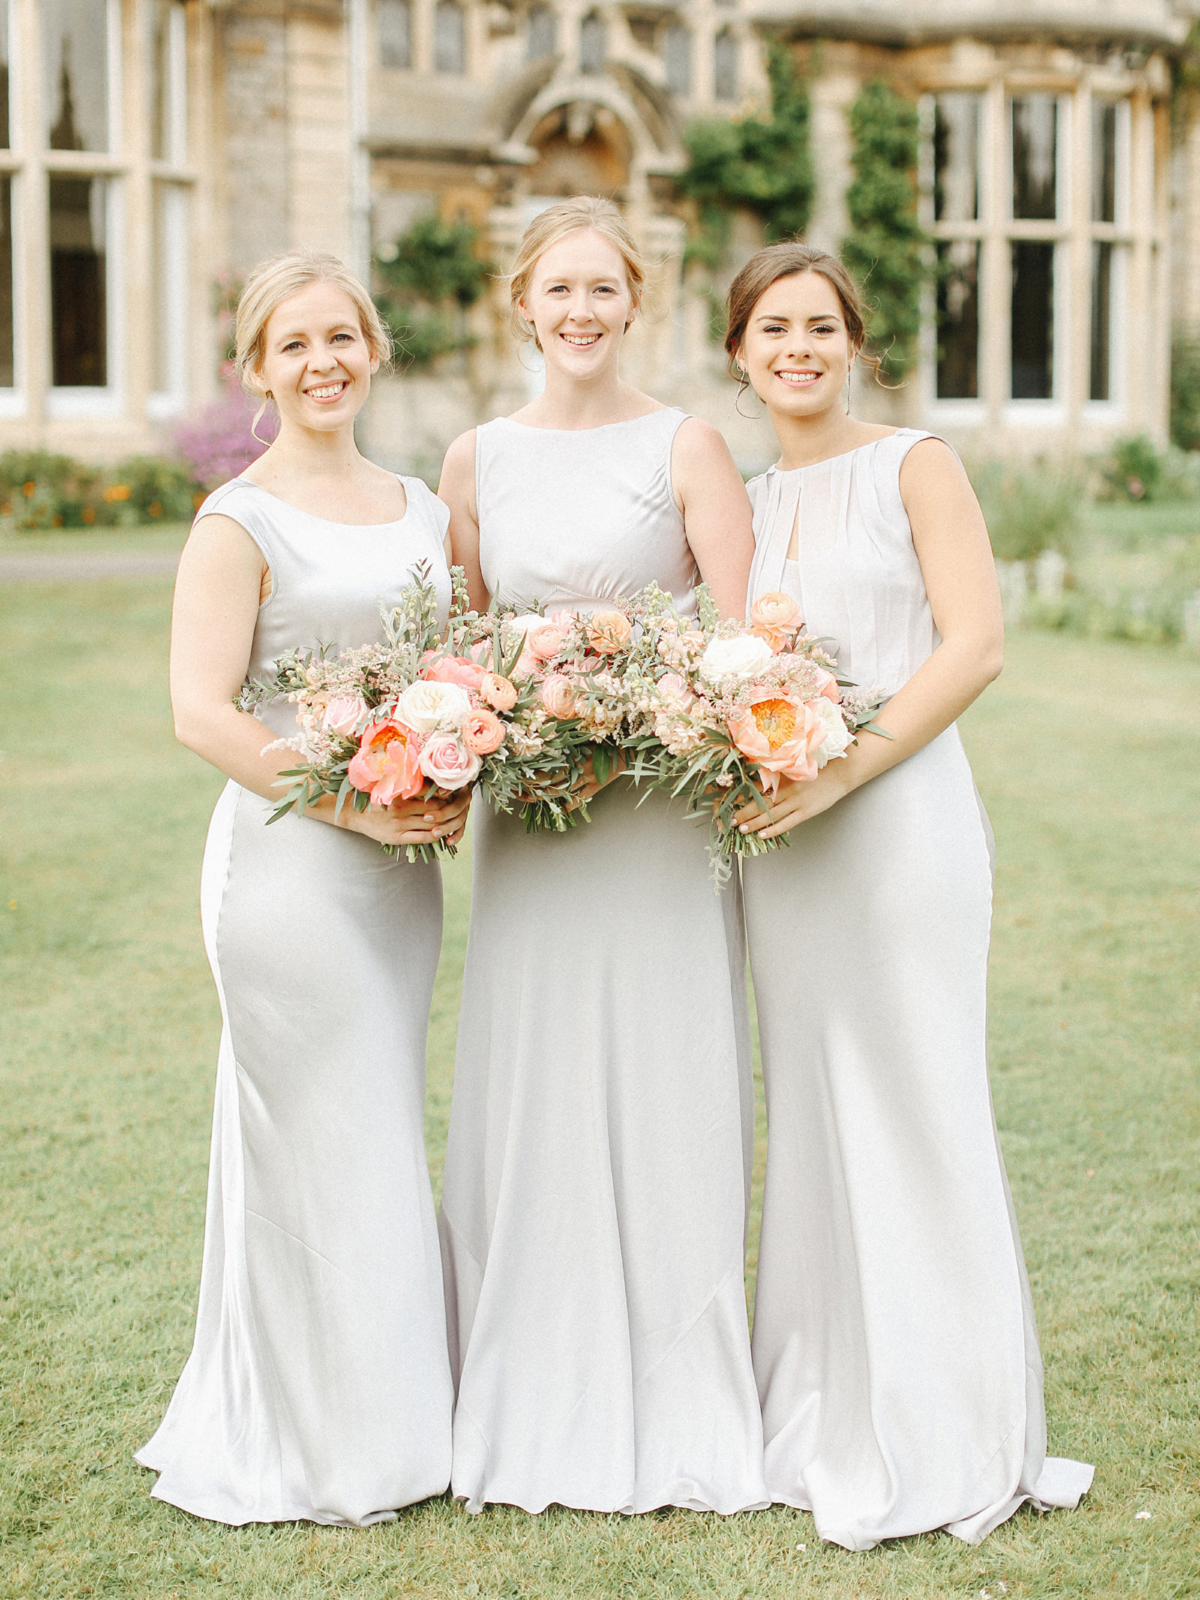 93 Ghost bridesmaids dresses in pale slate grey